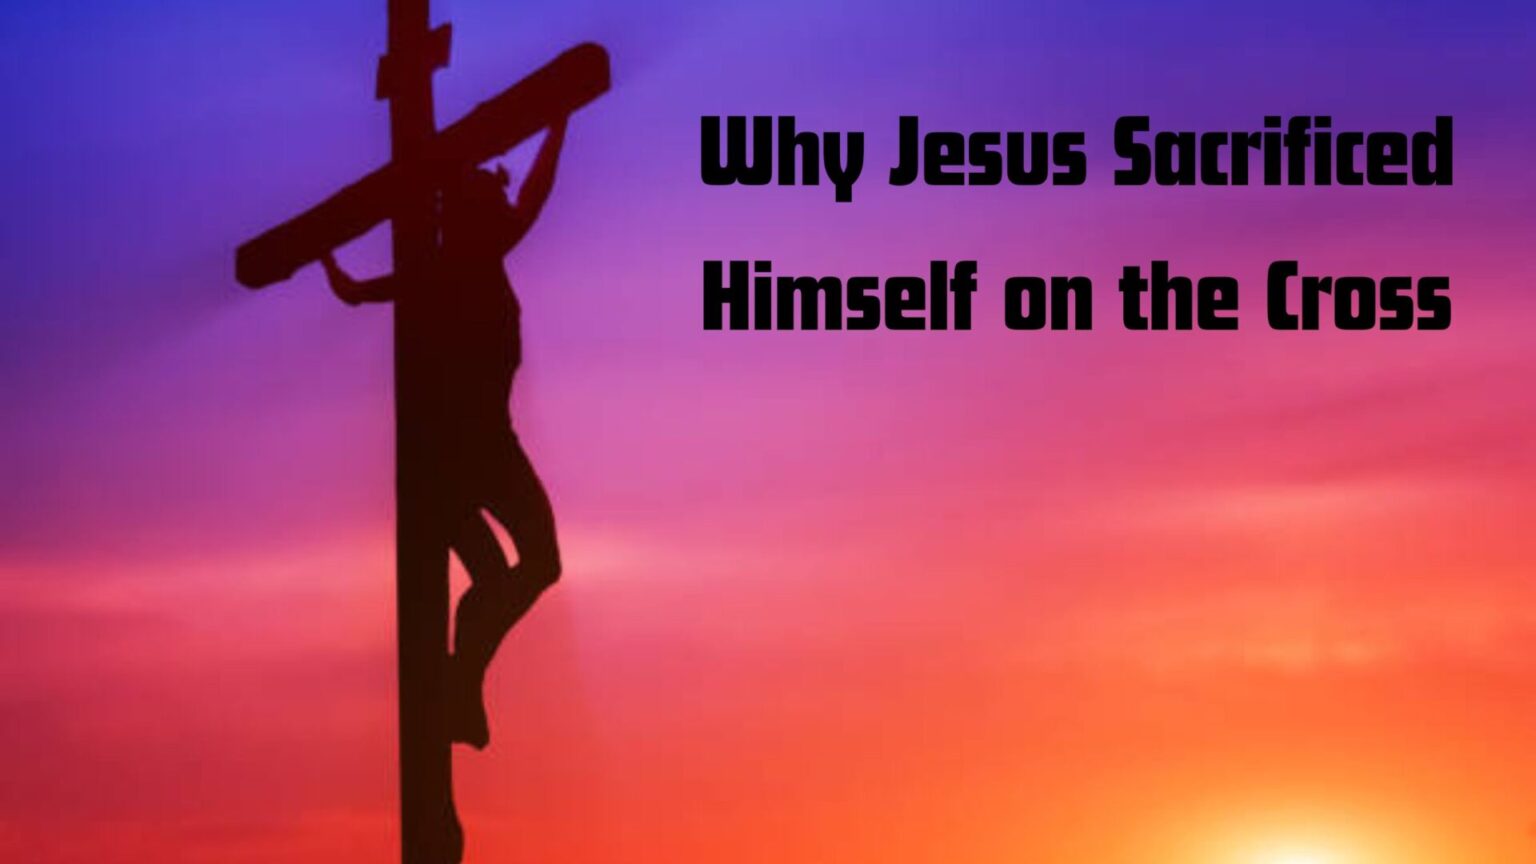 Decoding the Purpose: Why Jesus Sacrificed Himself on the Cross"